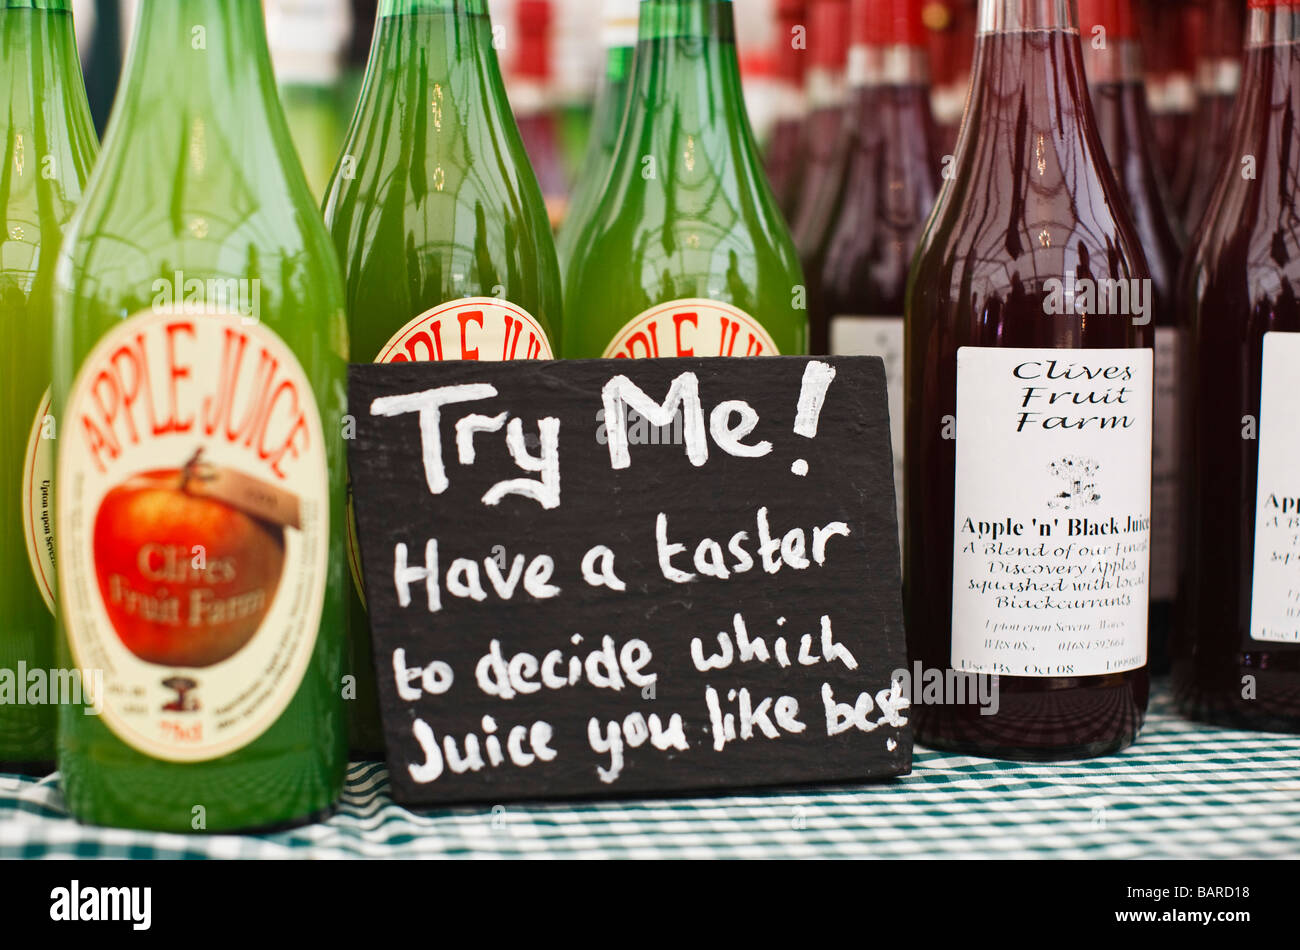 Apple juice on sale on a farmers market stall, UK Stock Photo